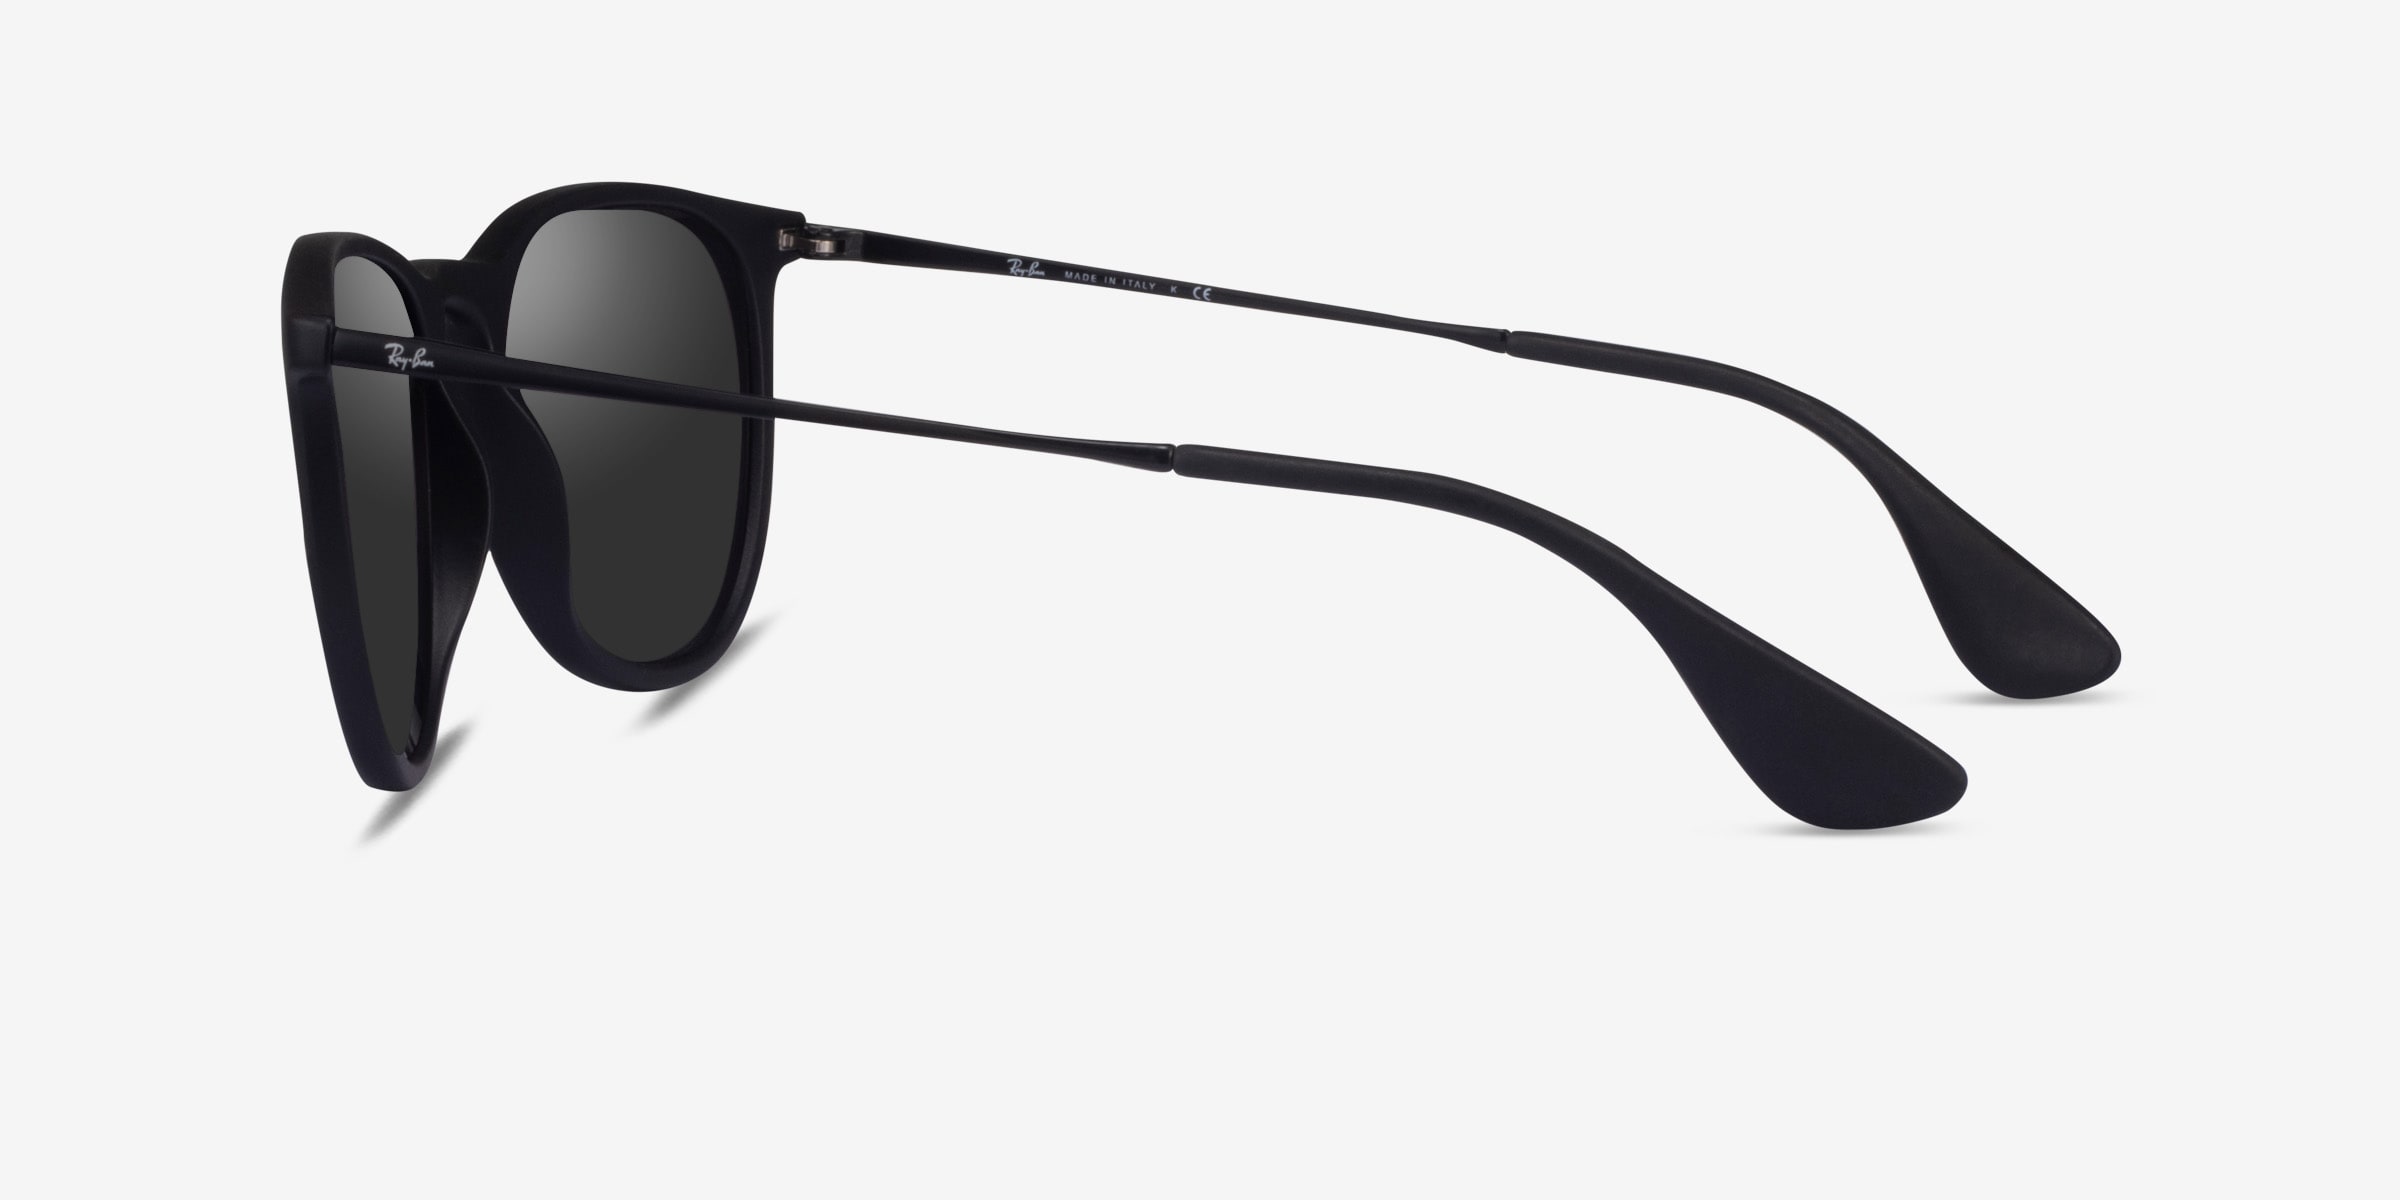 Ray-Ban RB4171 Erika - Oval Black Frame Sunglasses For Women